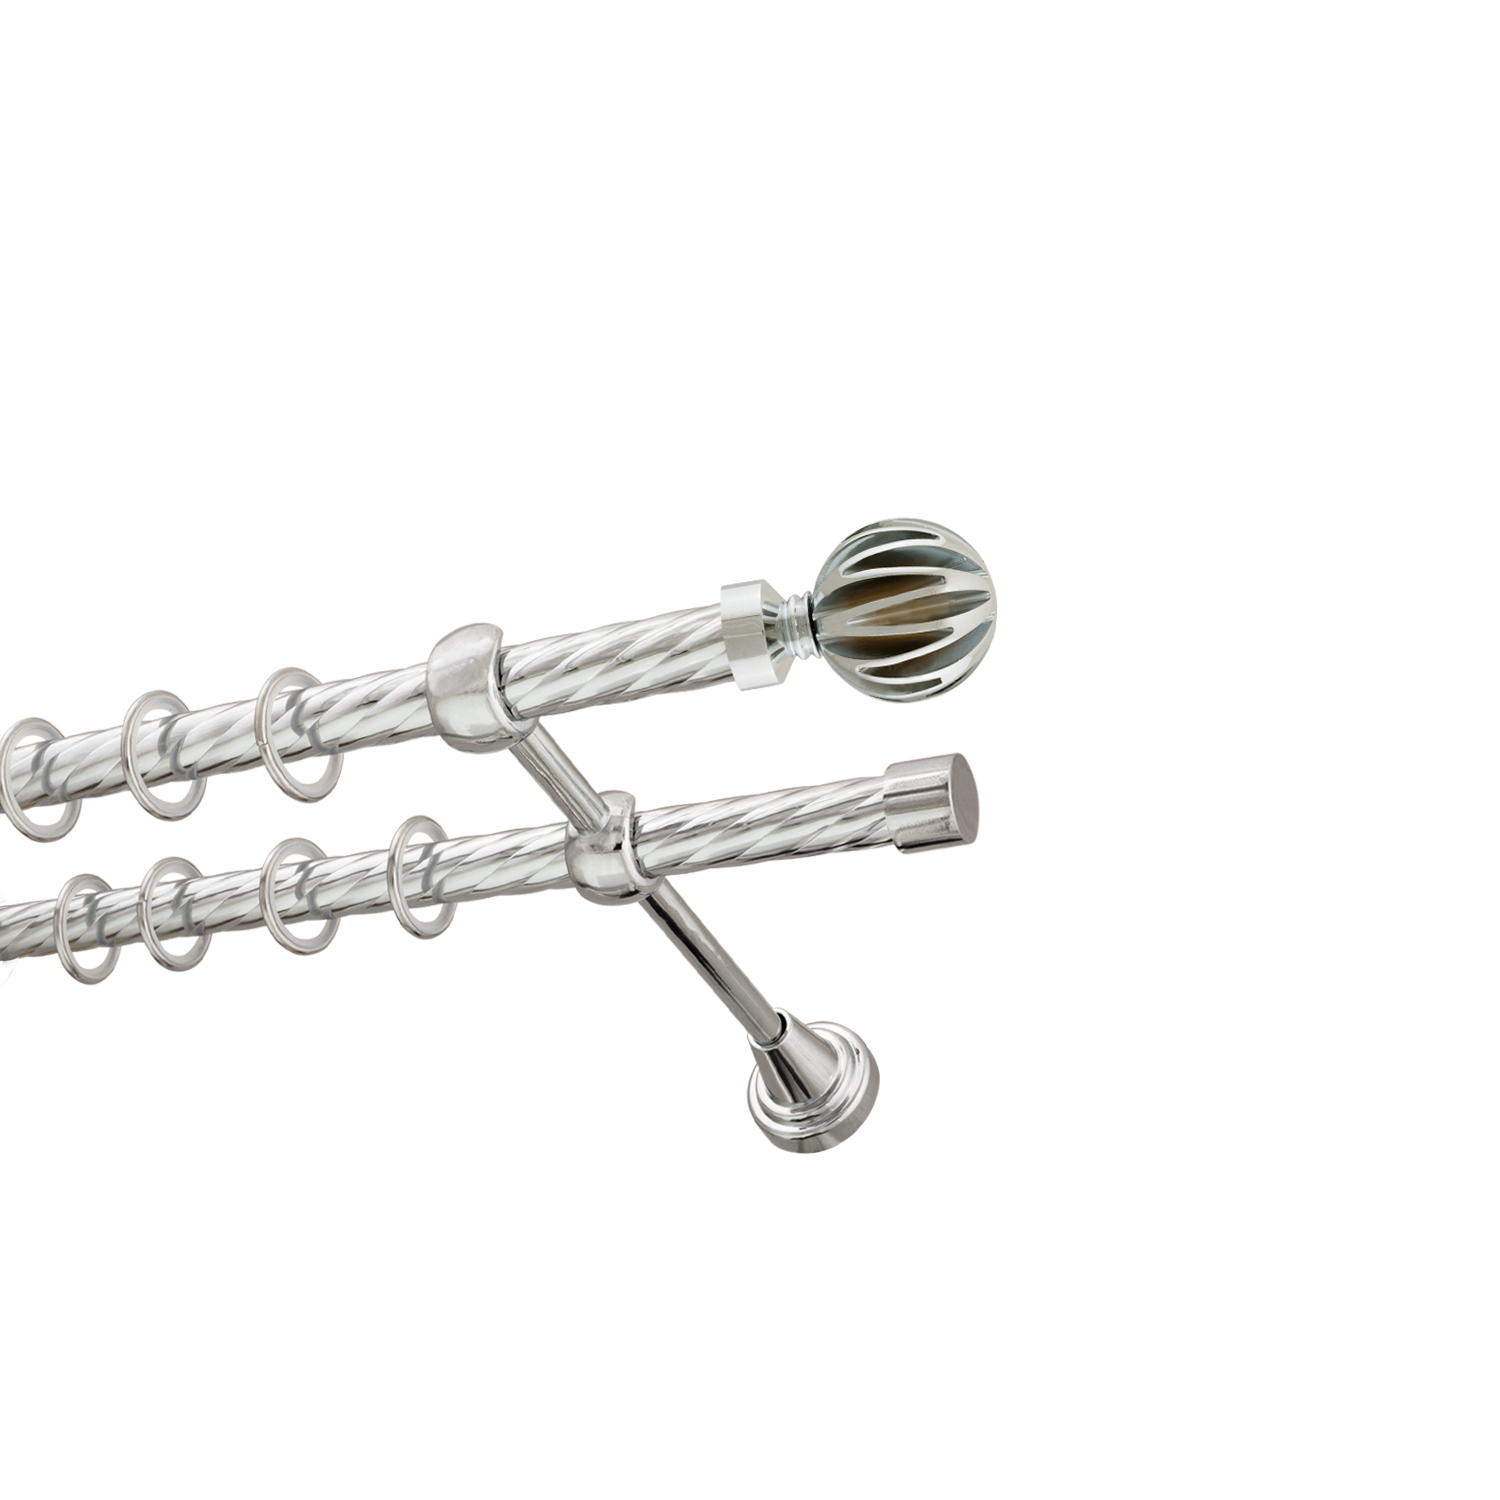 Металлический карниз для штор Шафран, двухрядный 16/16 мм, серебро, витая штанга, длина 300 см - фото Wikidecor.ru